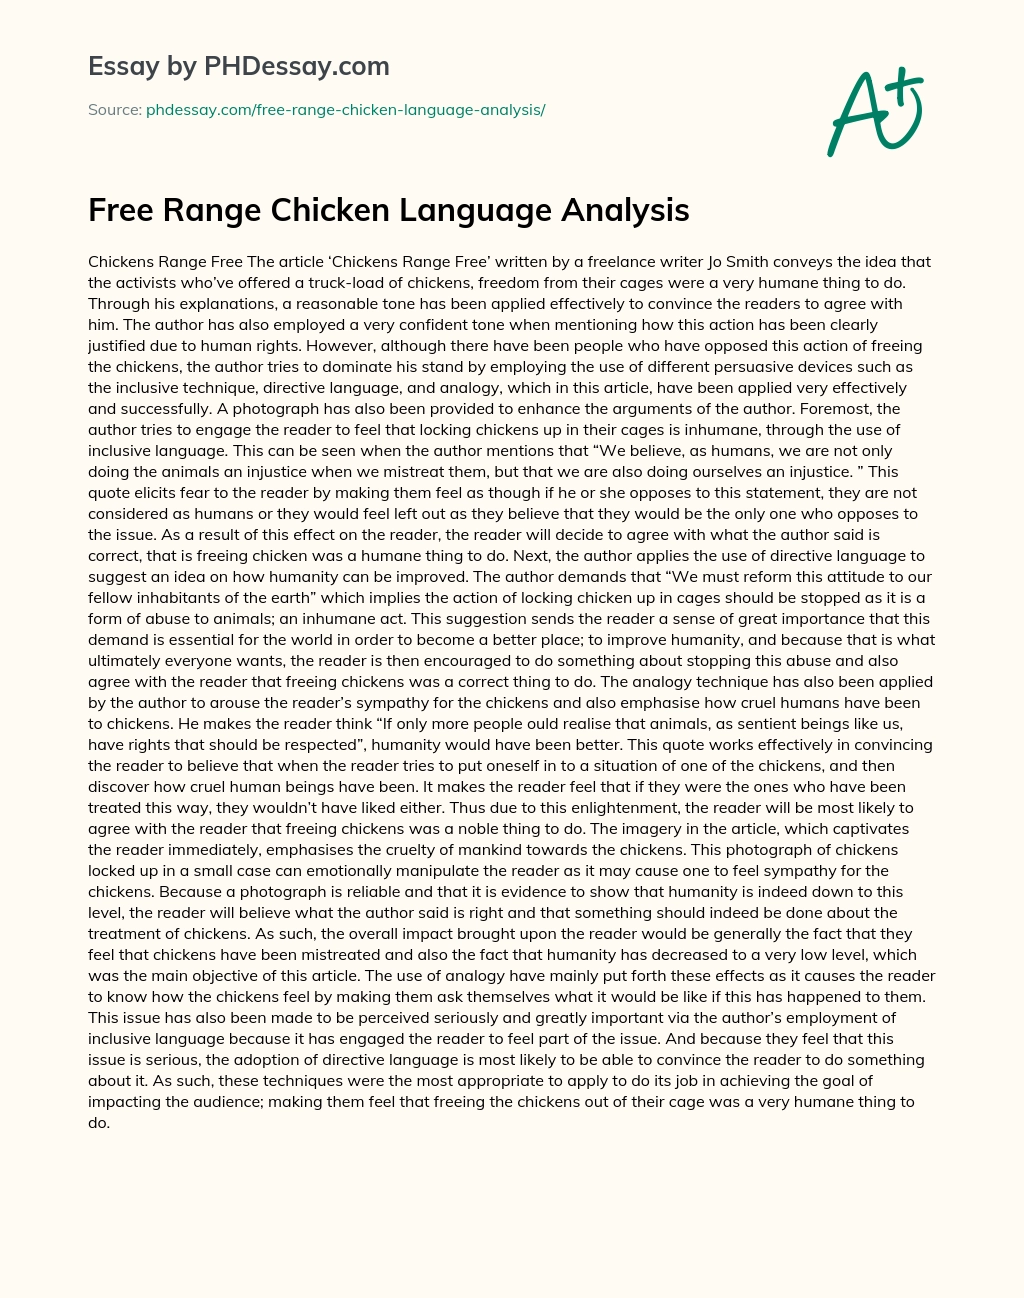 Free Range Chicken Language Analysis essay